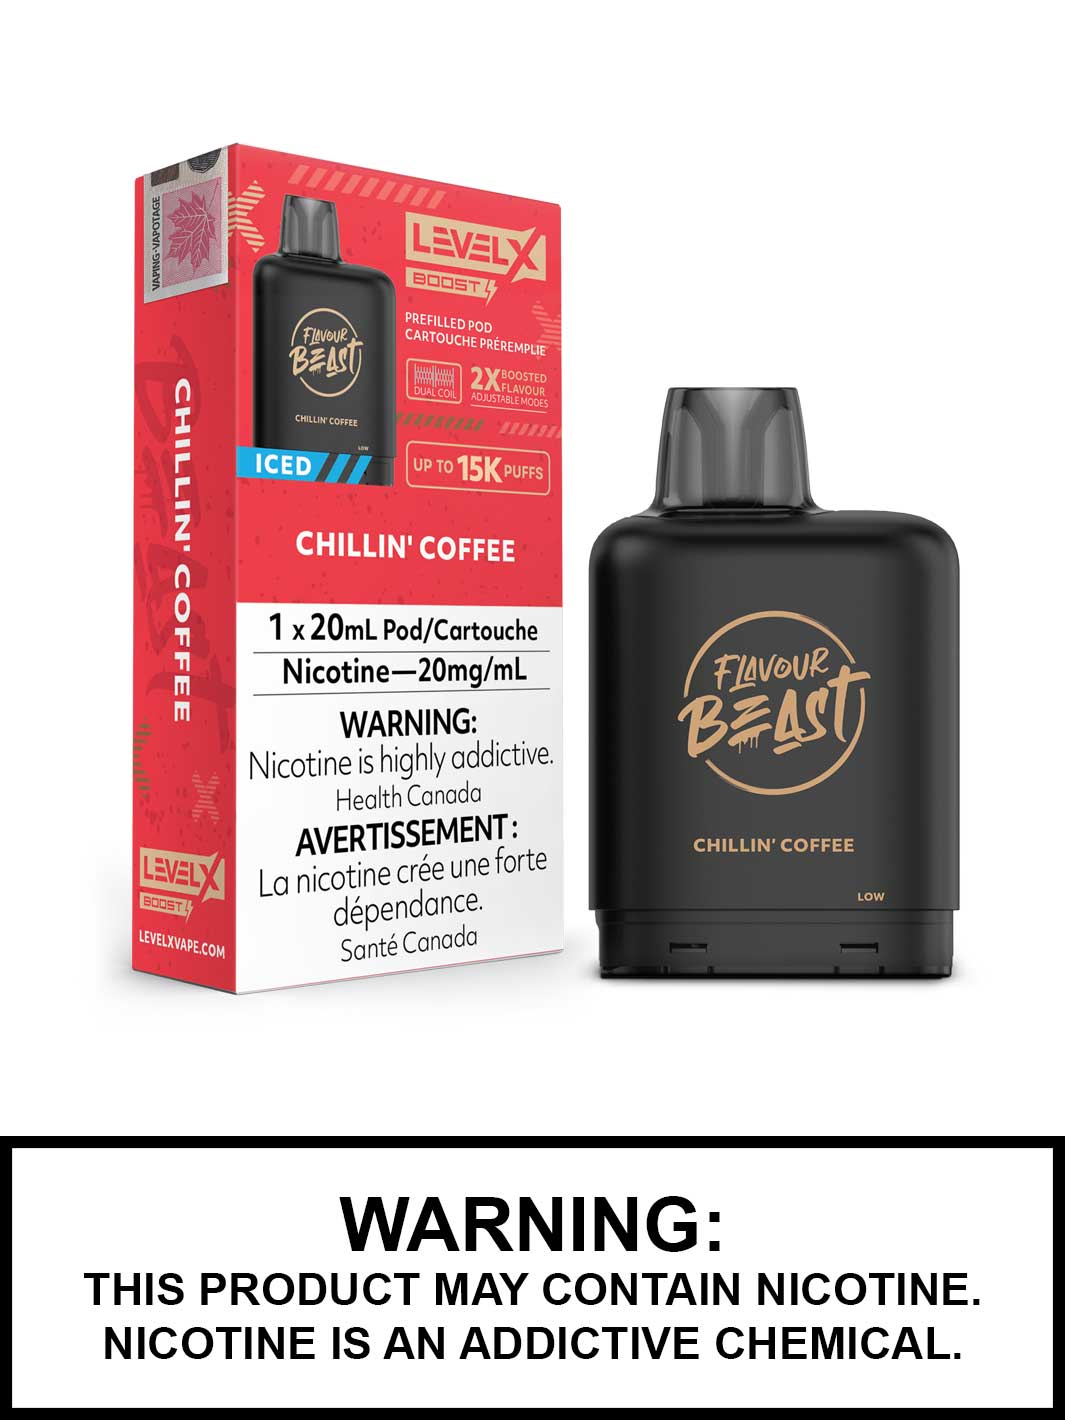 Chillin Coffee Iced Flavour Beast Level X Boost Pods, Level X Vape, Vape360 Canada